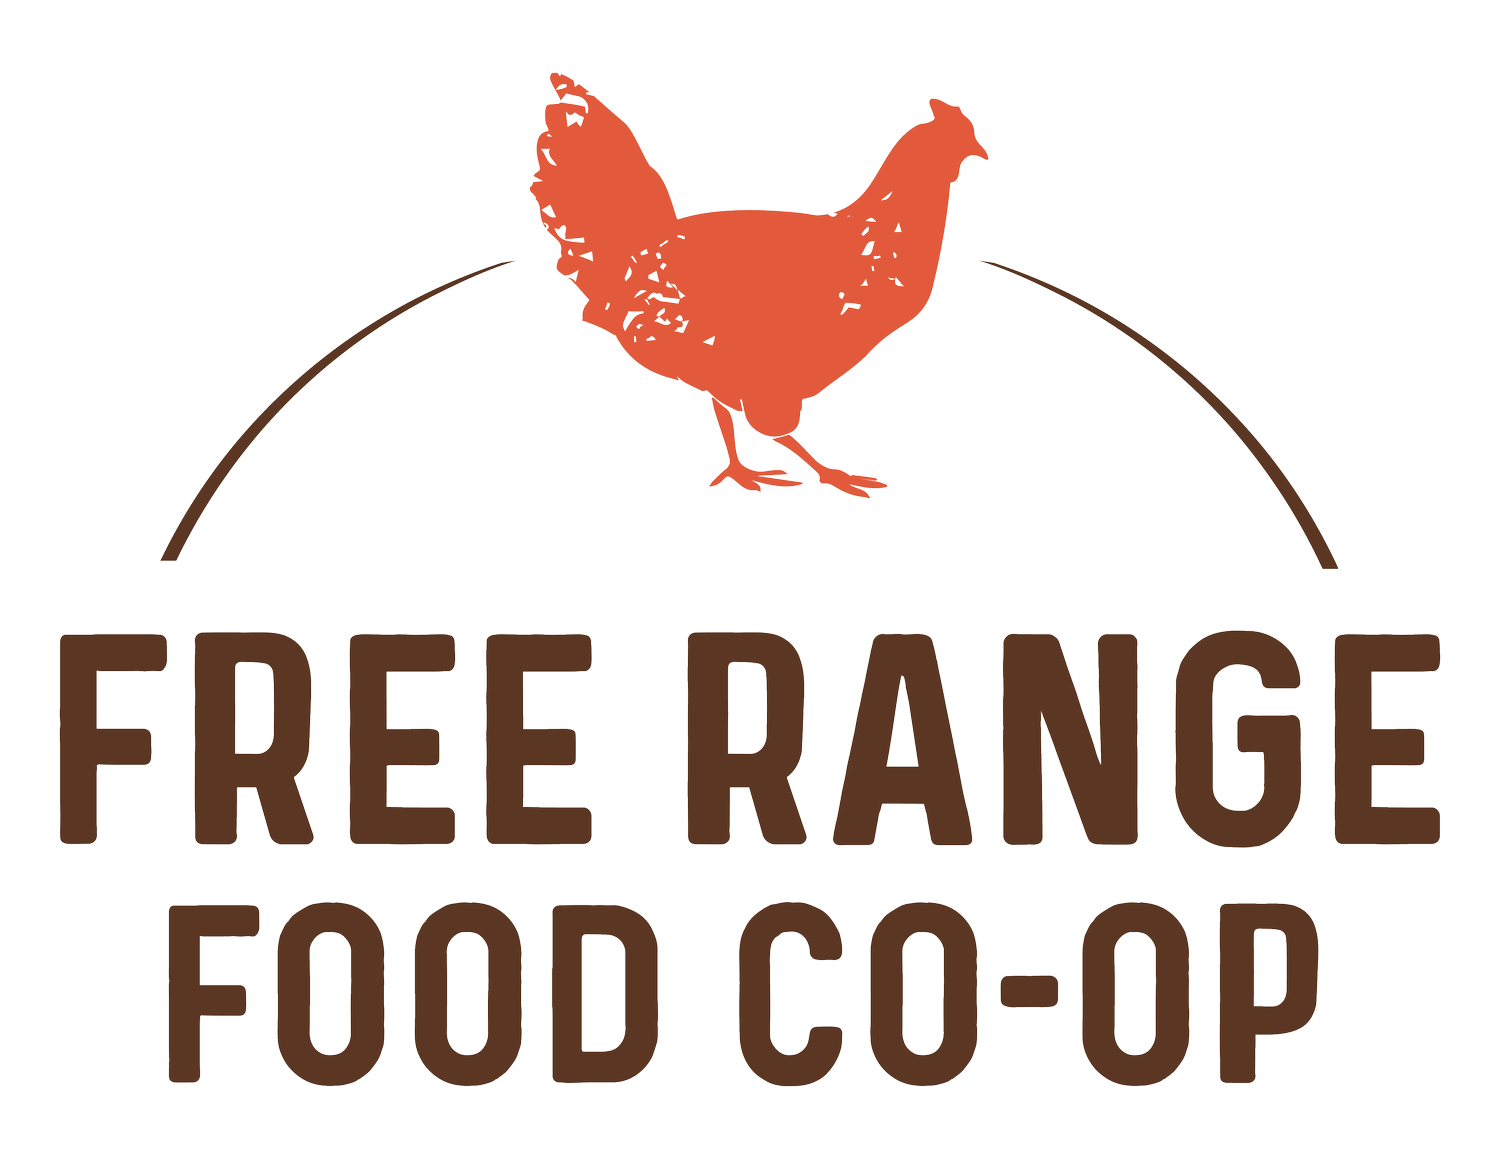 FREE RANGE FOOD CO-OP